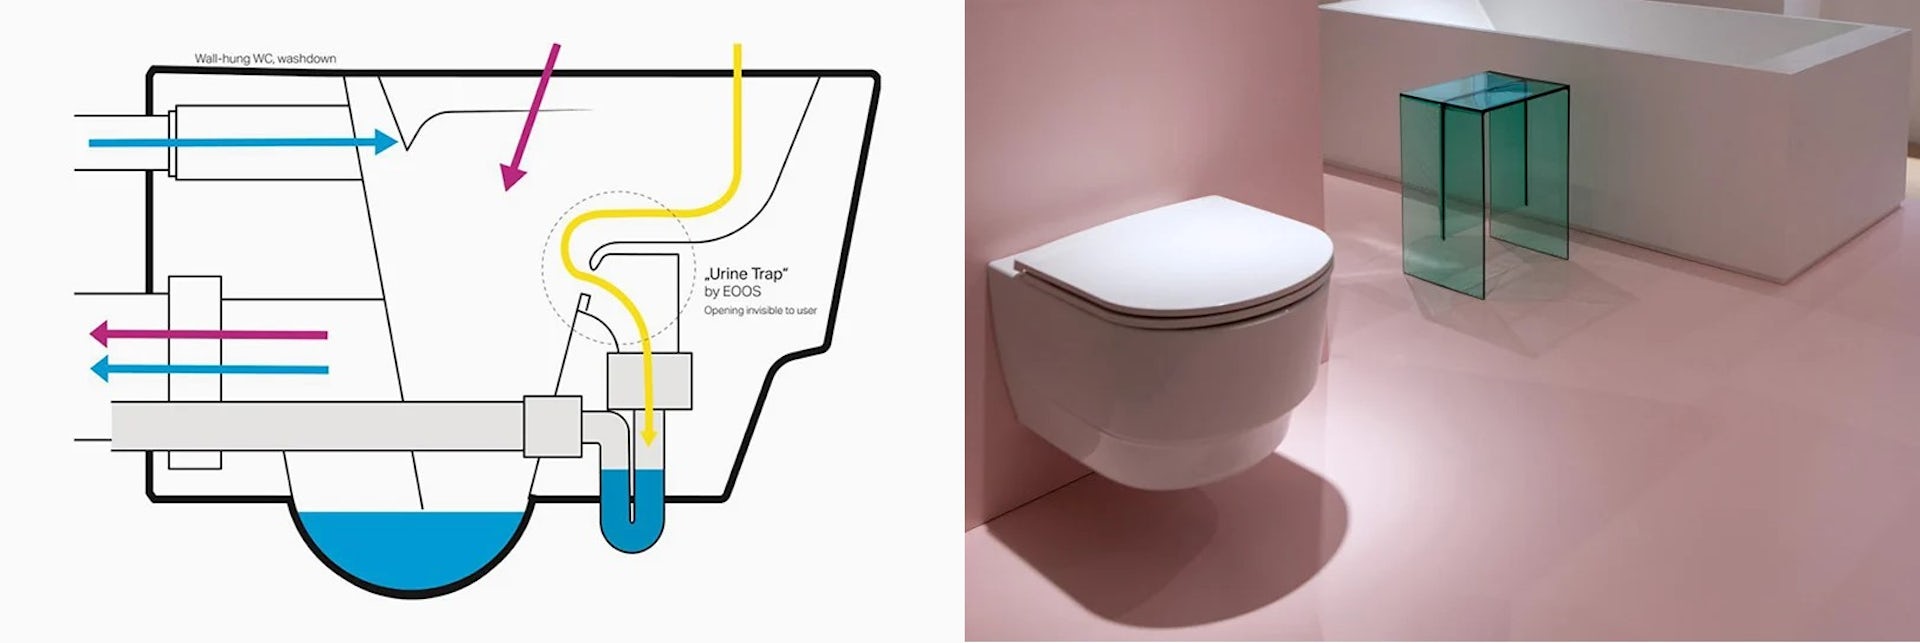  Un graphique illustrant un piège à urine invisible.